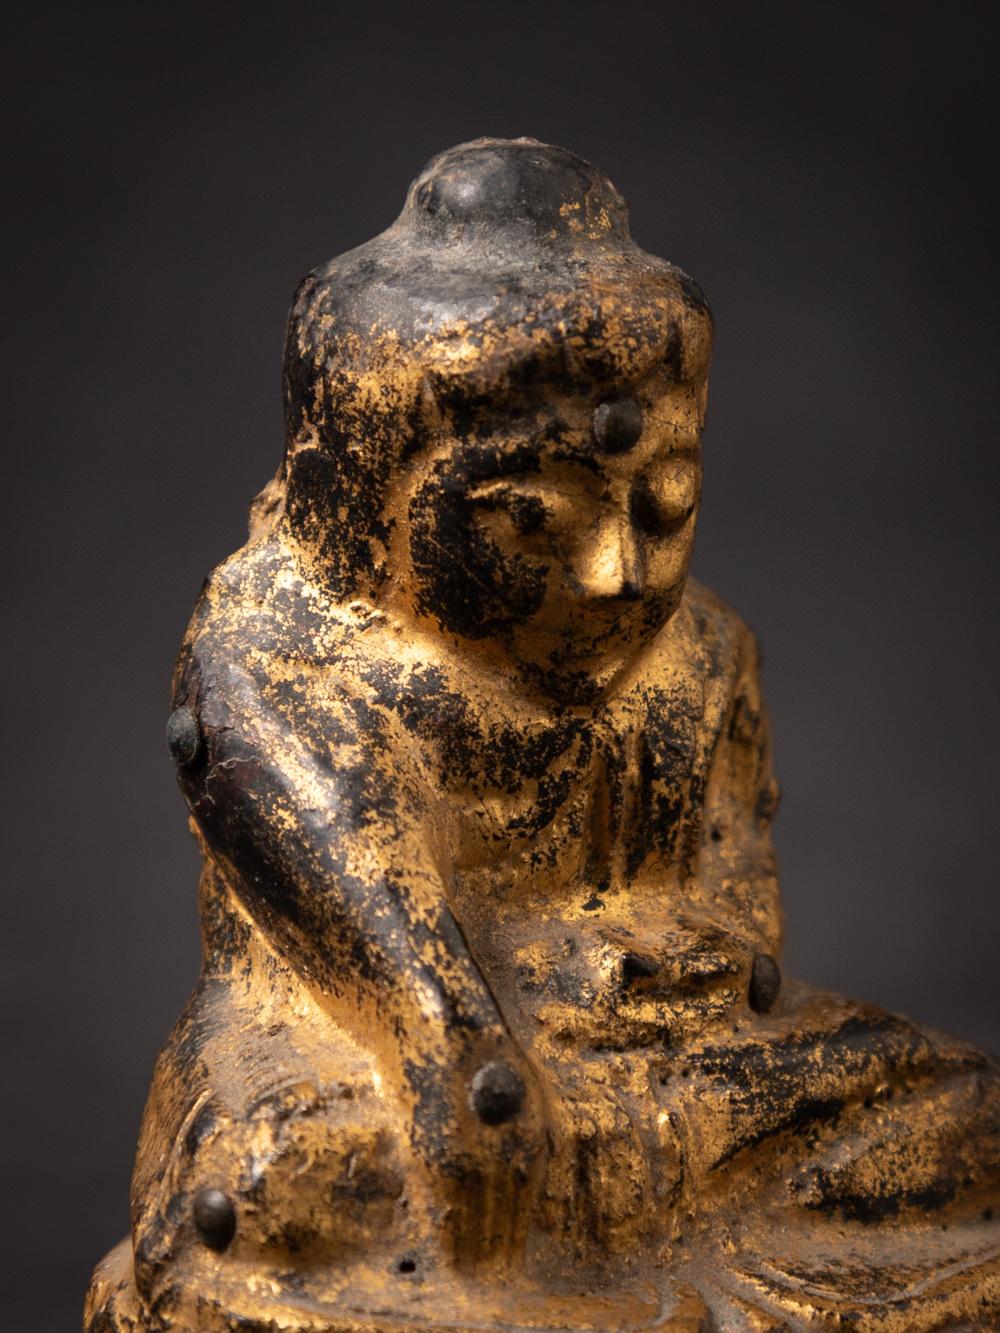 19th Century 19th century Antique wooden Burmese Lotus Buddha statue in Bhumisparsha Mudra For Sale